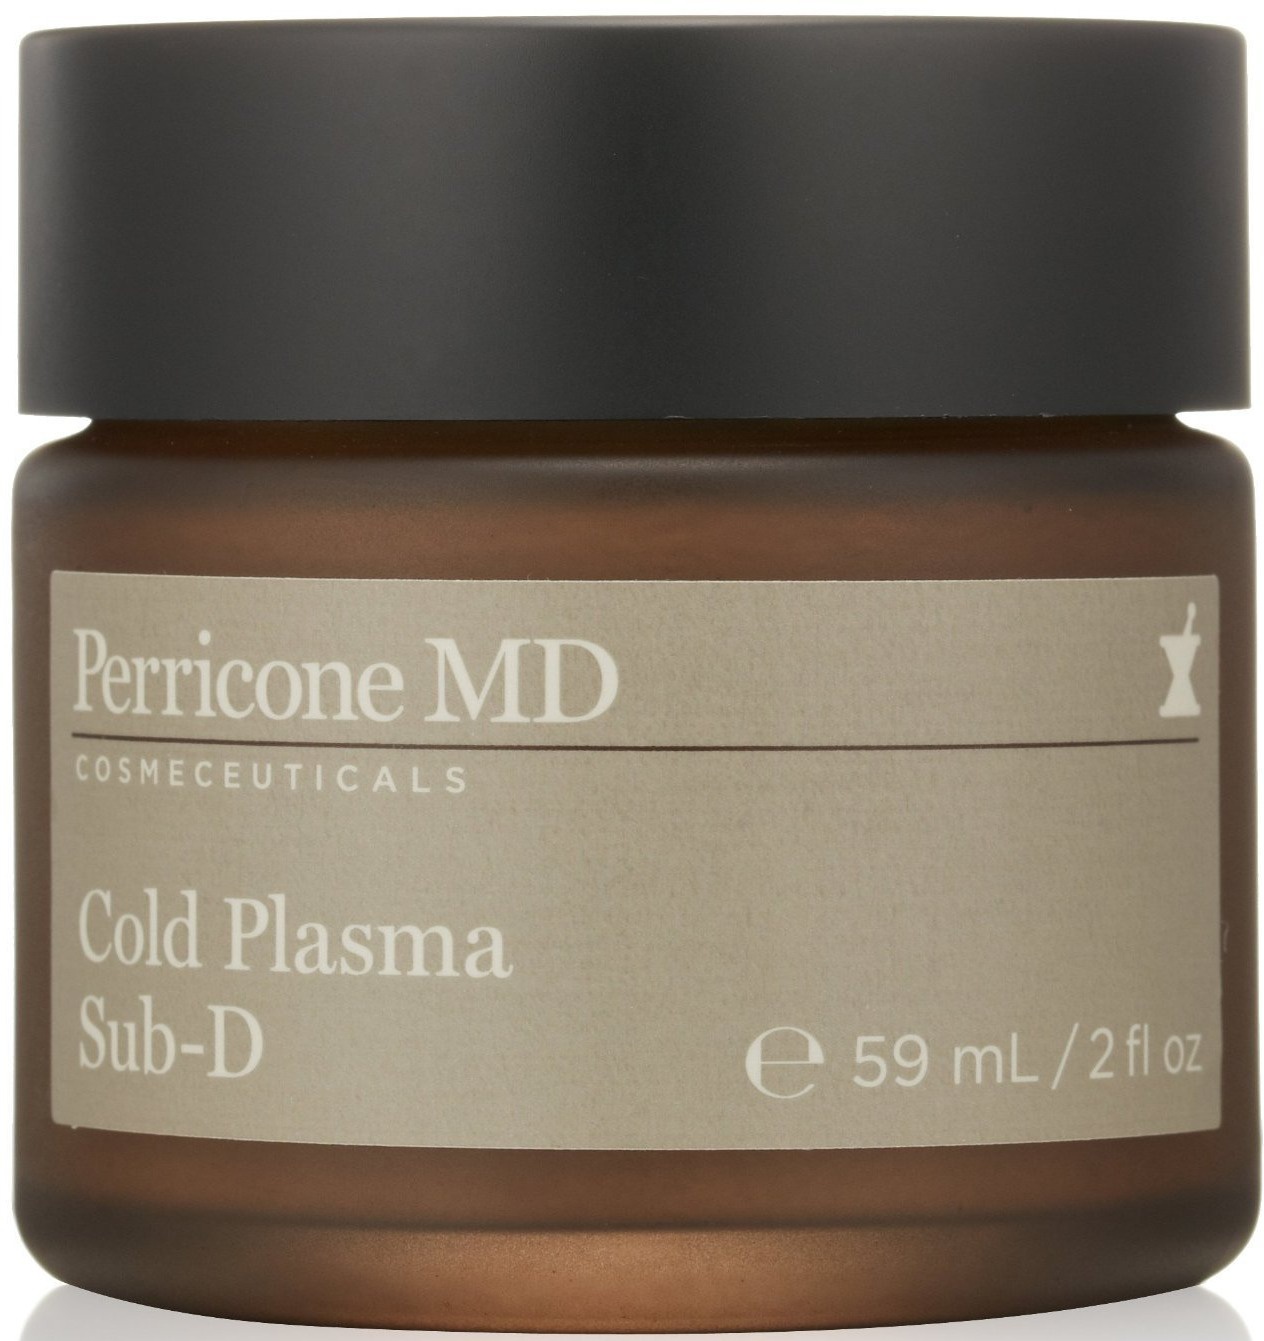 Perricone MD Cold Plasma Sub-d